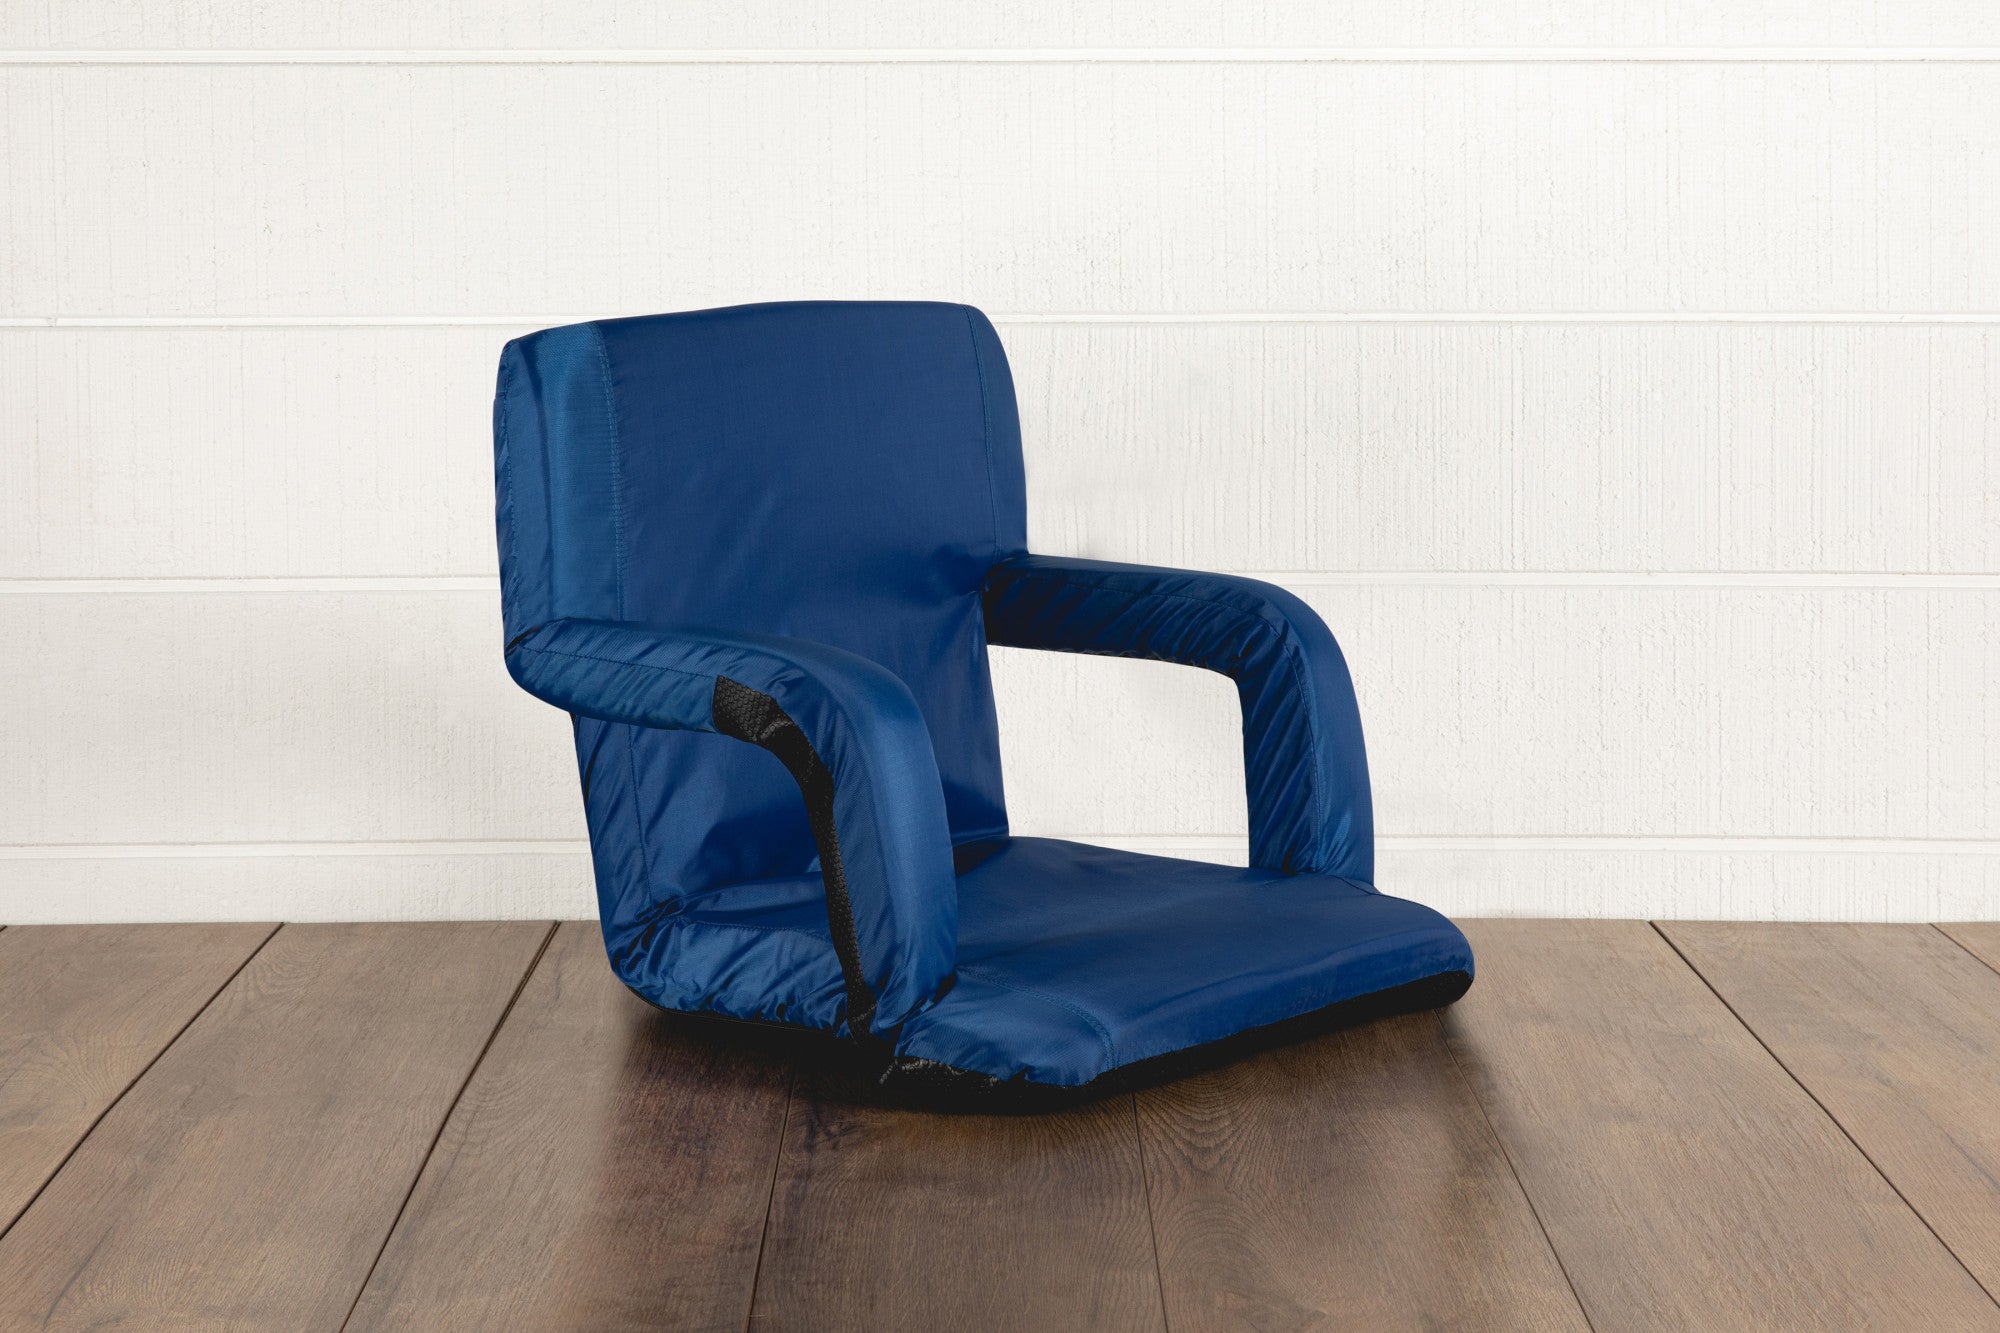 Folding Stadium Seat Cushion for Bleachers Navy / A